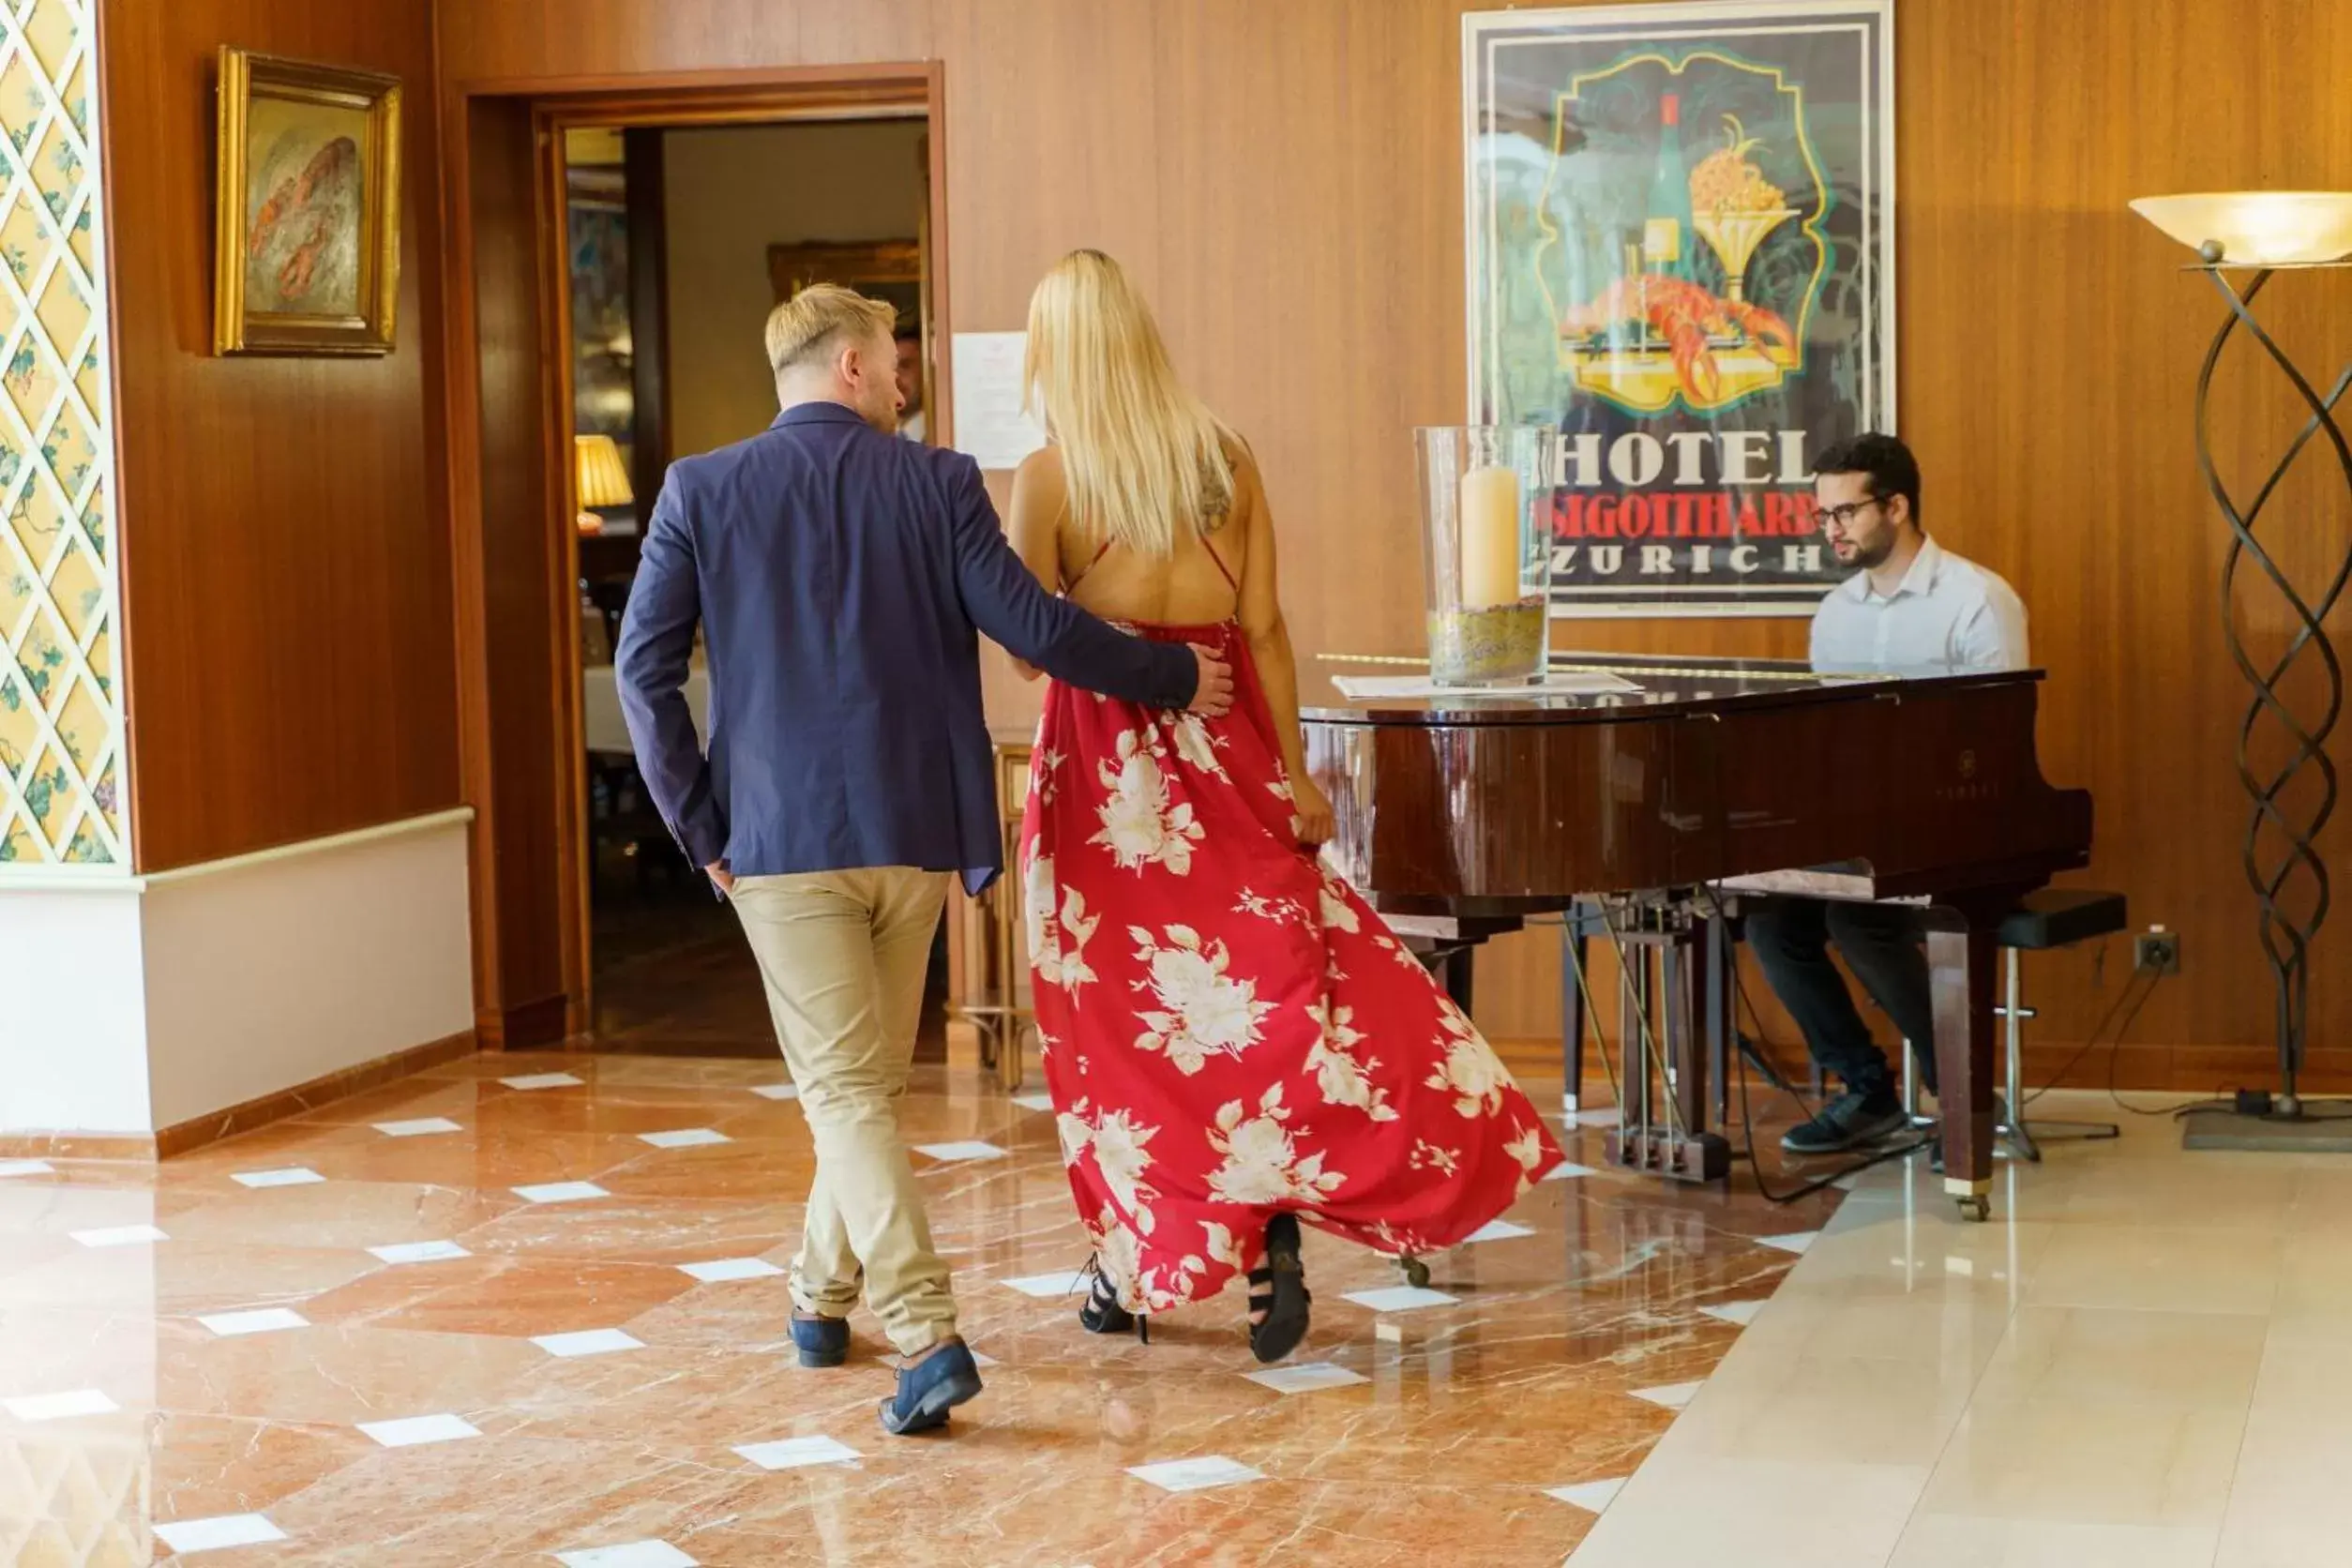 Lobby or reception in Hotel St.Gotthard